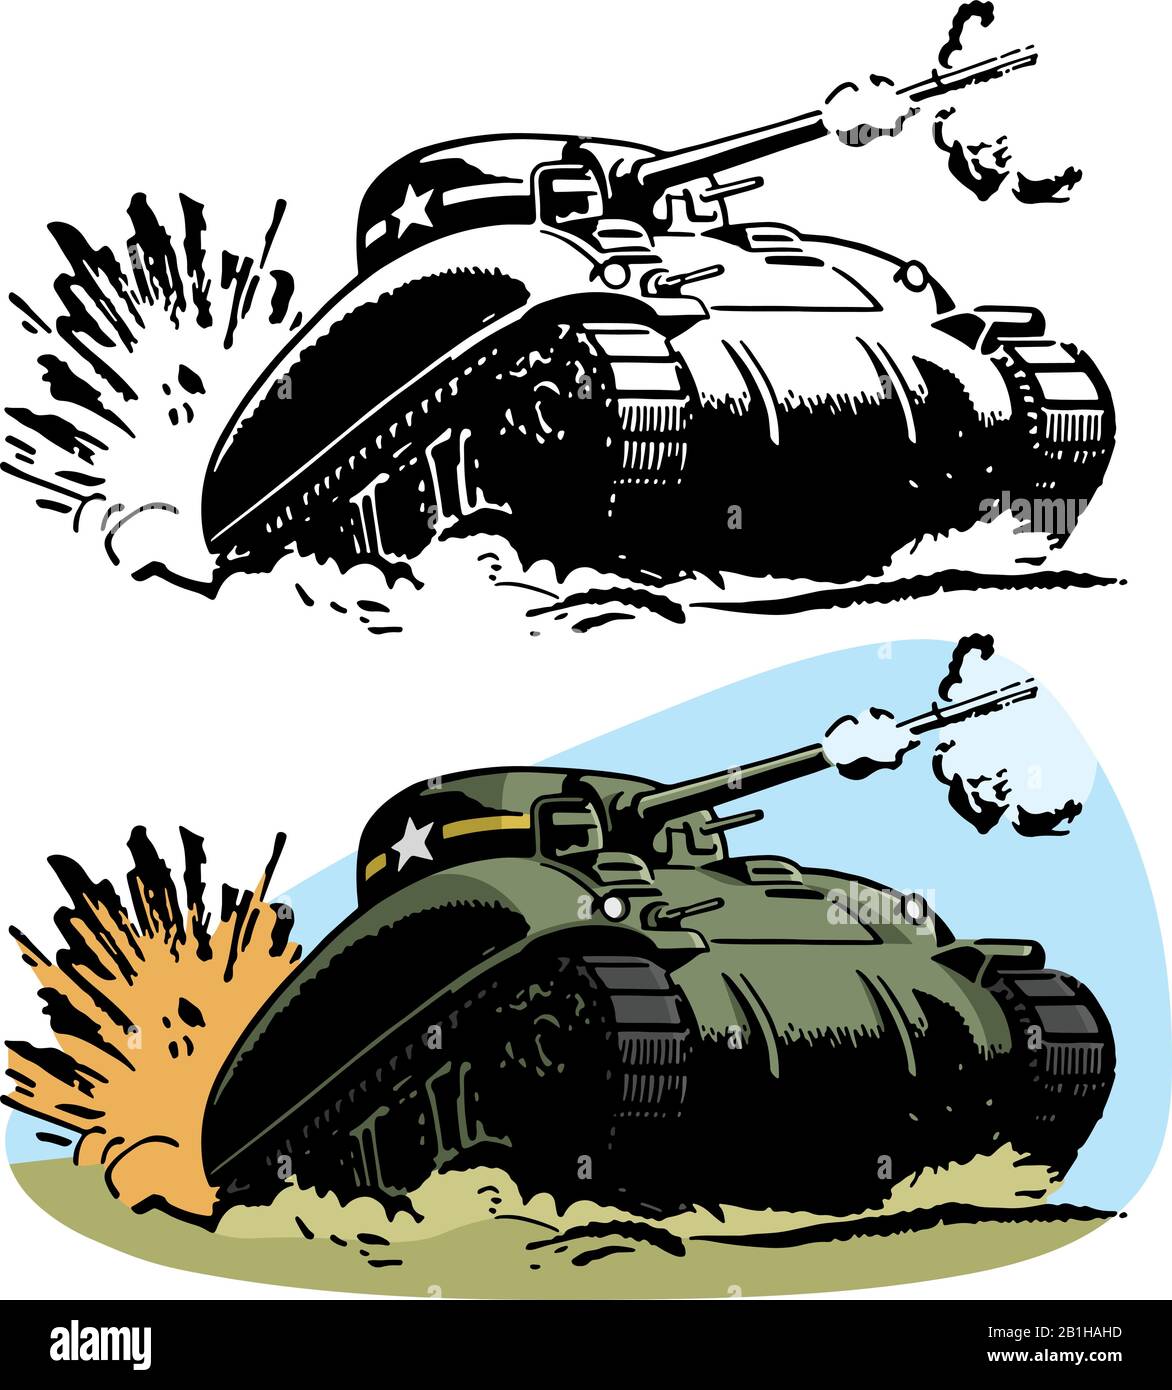 A drawing of an American and British World War II era M4-A1 Sherman tank. Stock Vector